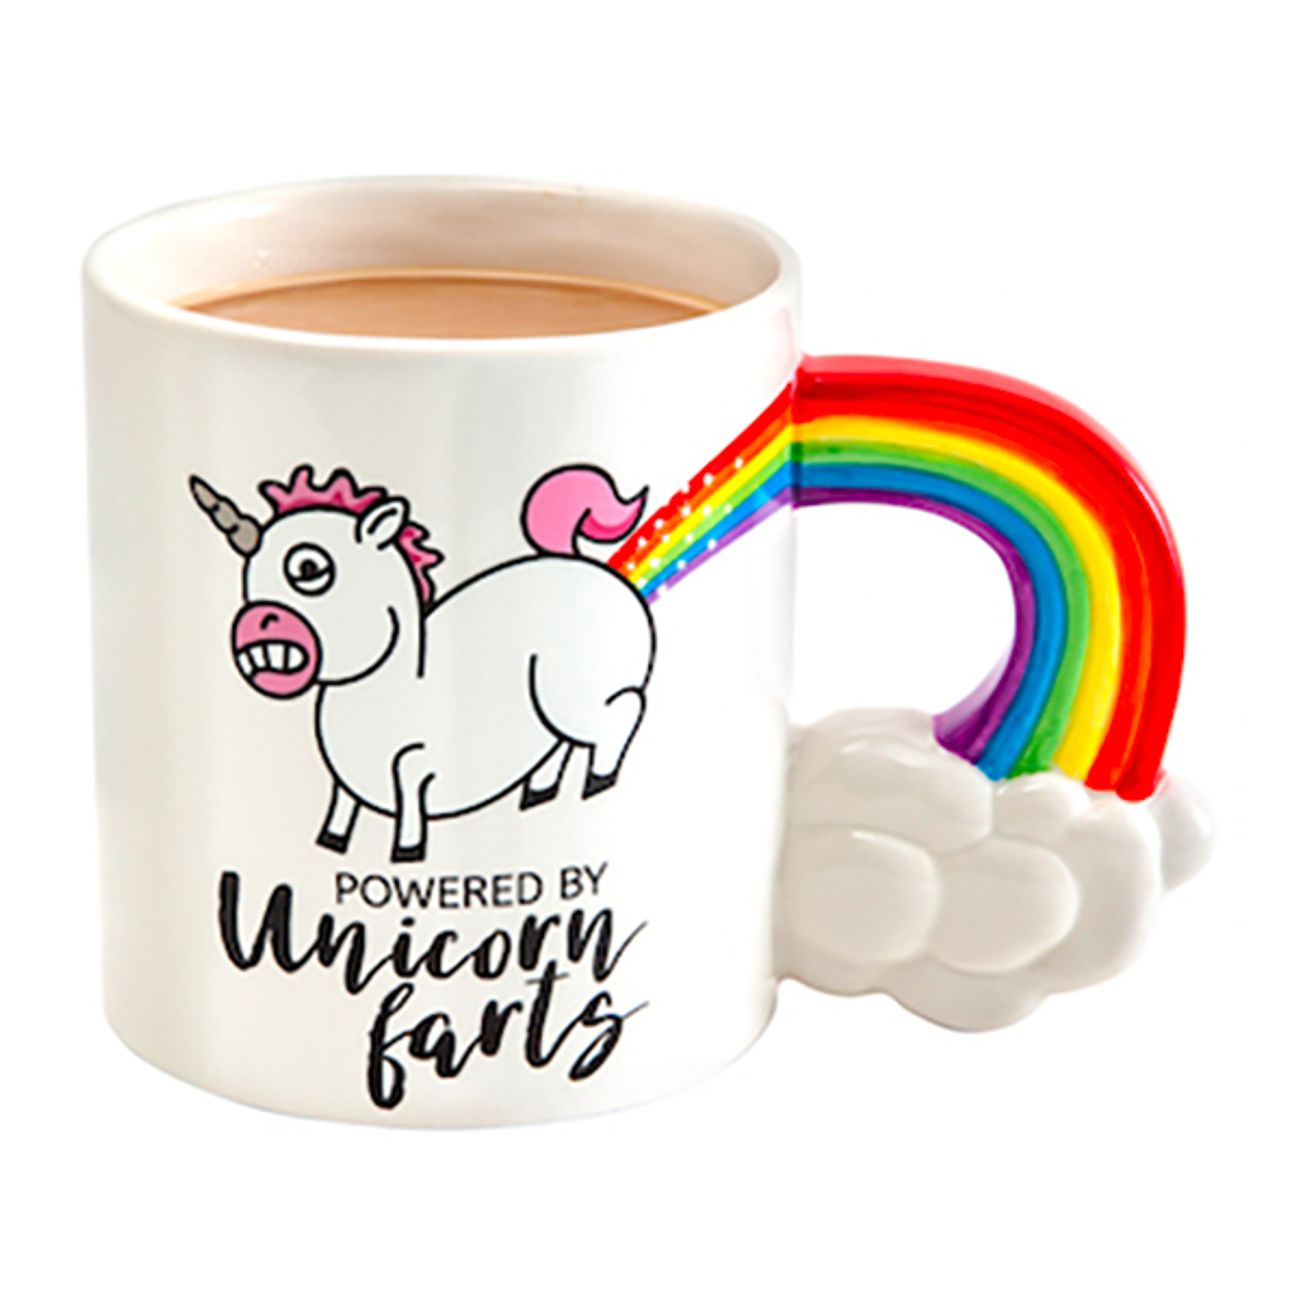 the-unicorn-farts-mugg-1